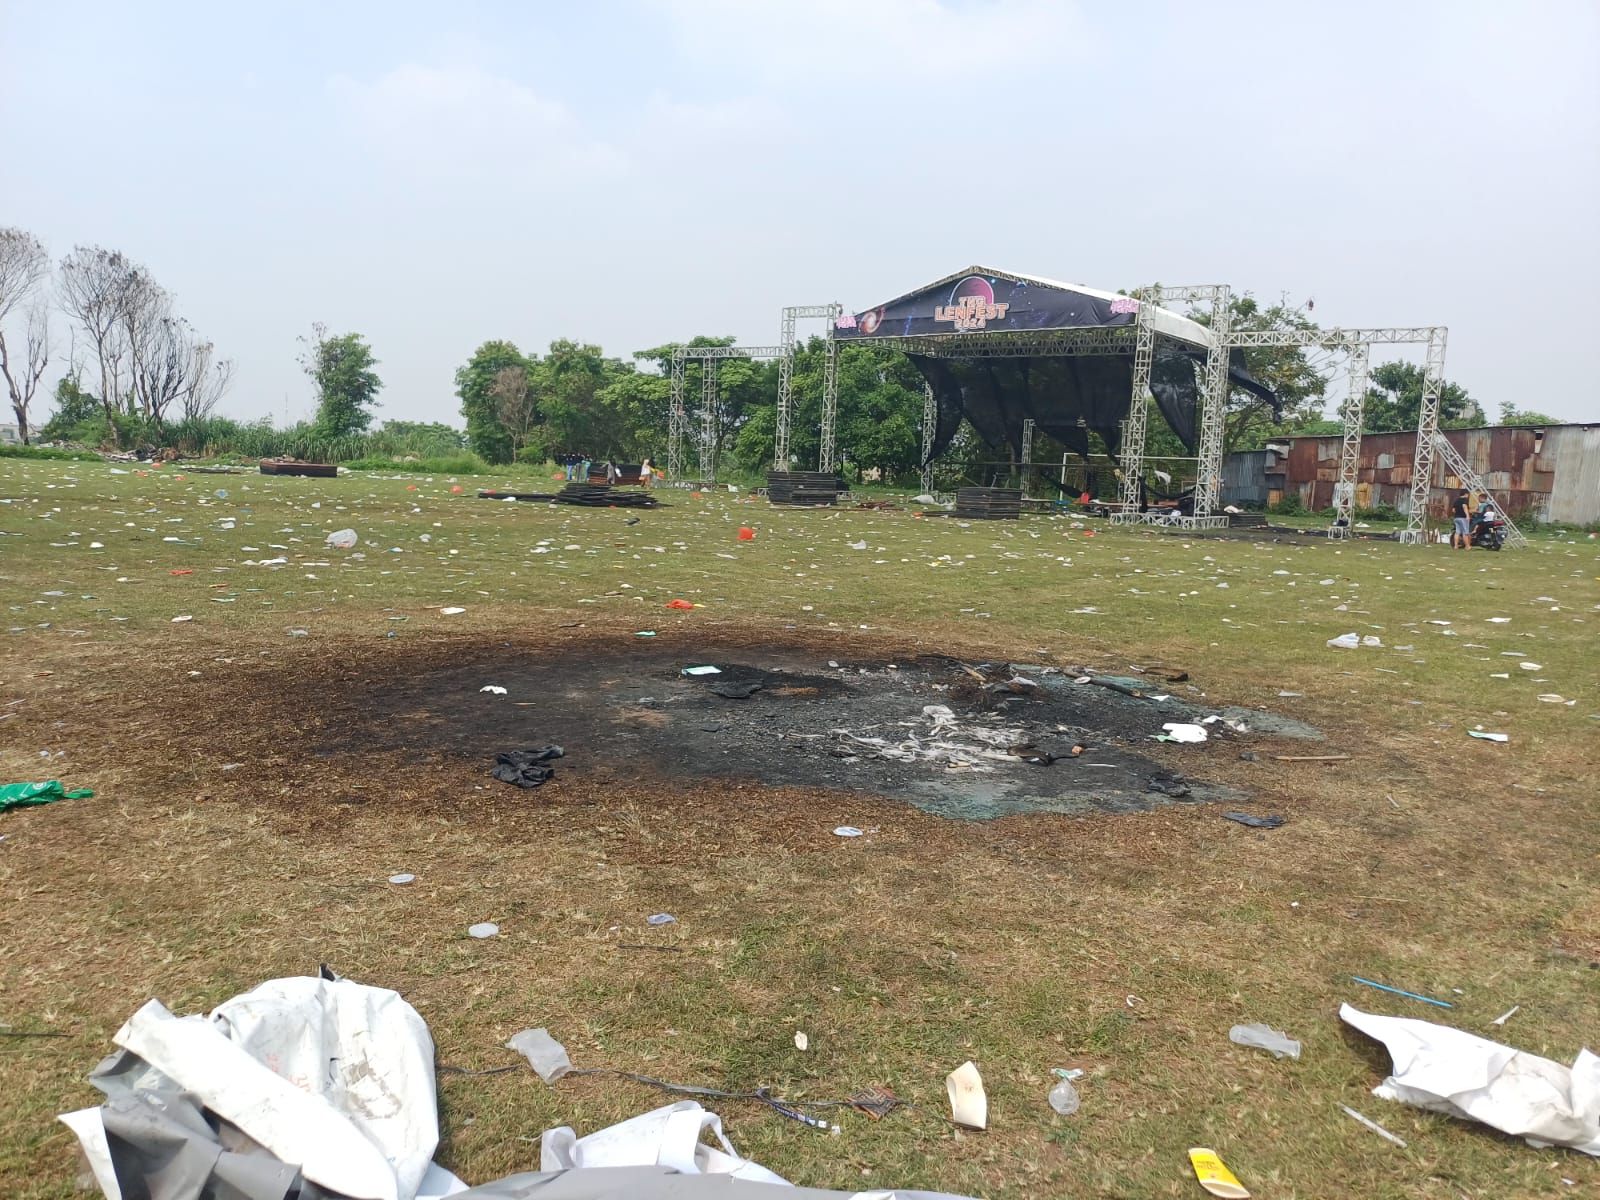 Banyak Sampah Plastik dan Bekas Terbakar Usai Penonton Mengamuk di Konser Festival Lentera Tangerang